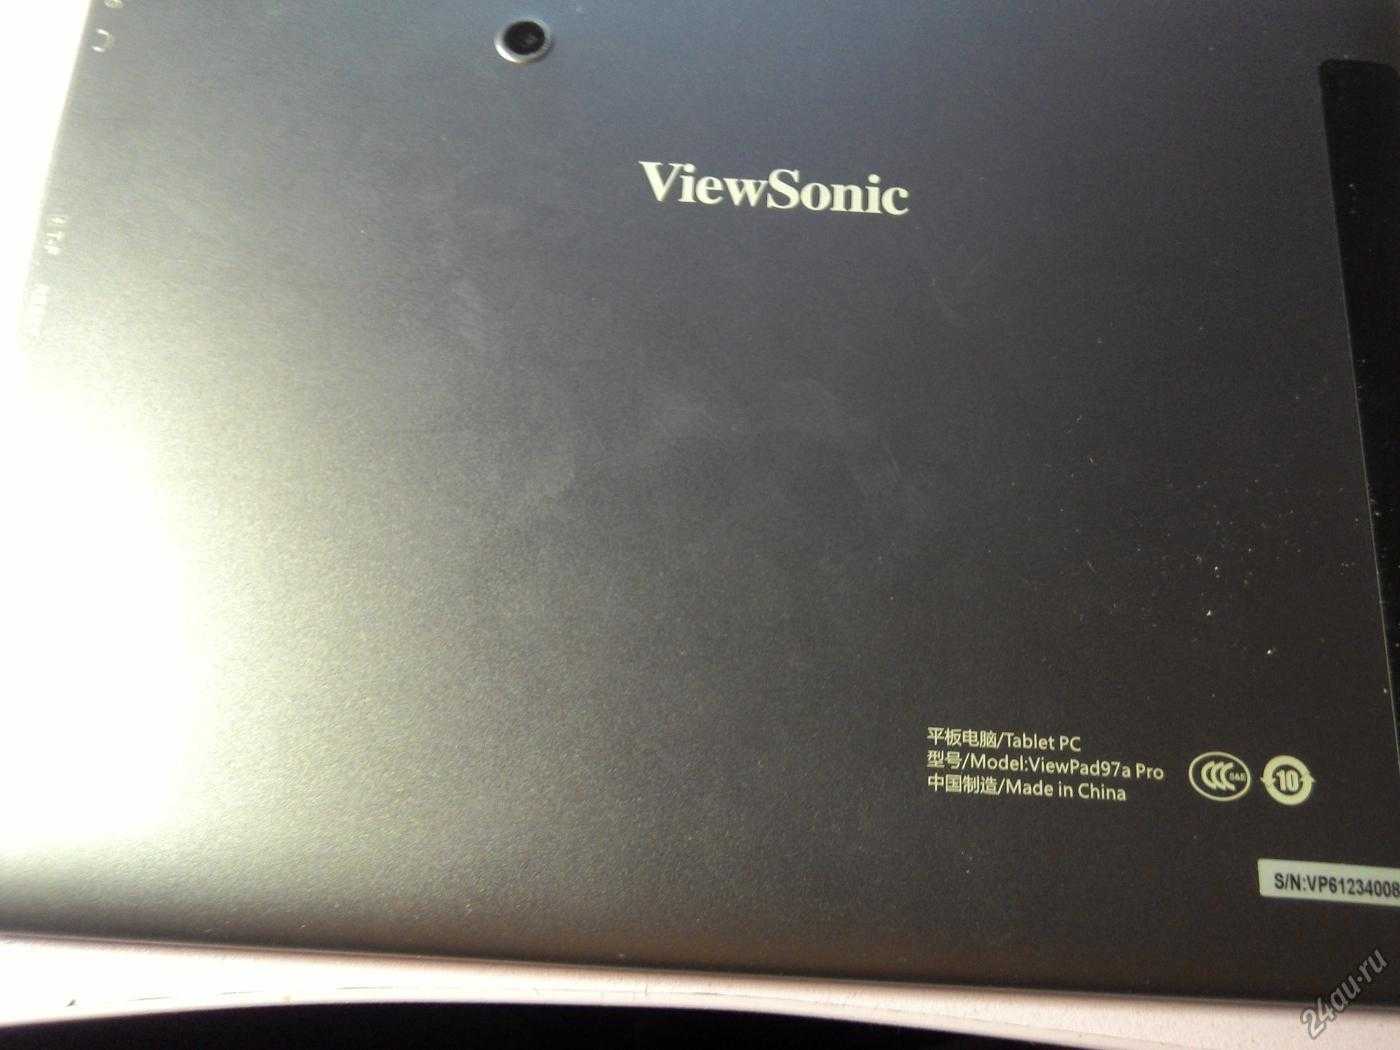 Viewsonic viewpad 10e - купить , скидки, цена, отзывы, обзор, характеристики - планшеты